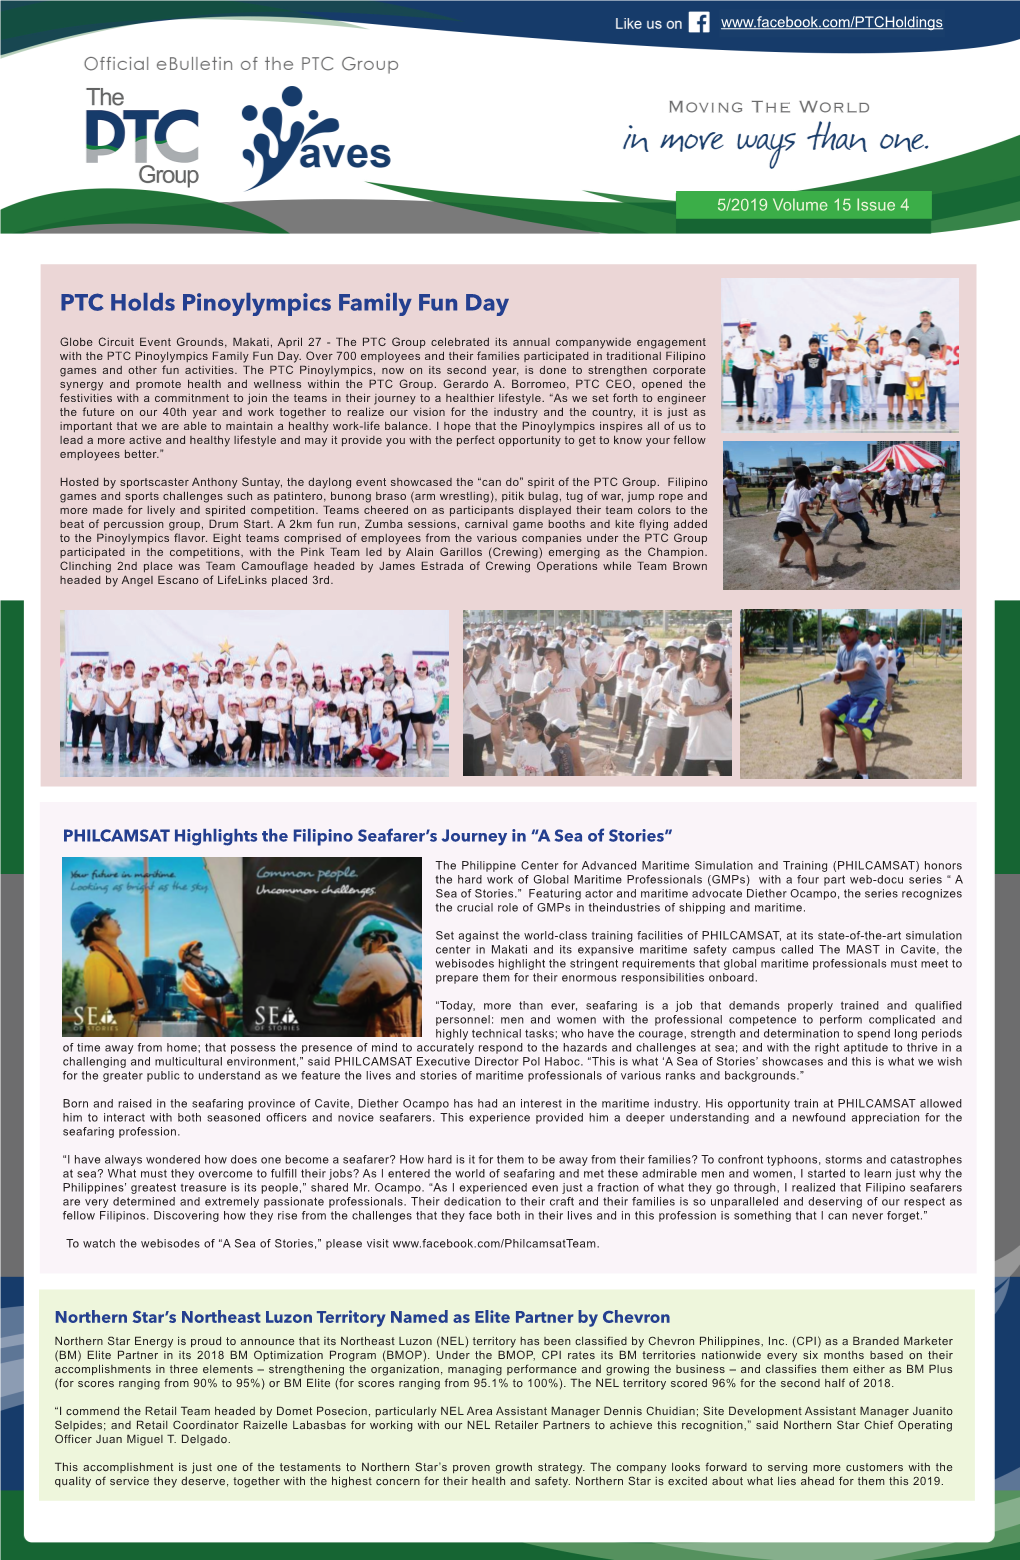 PTC Holds Pinoylympics Family Fun Day